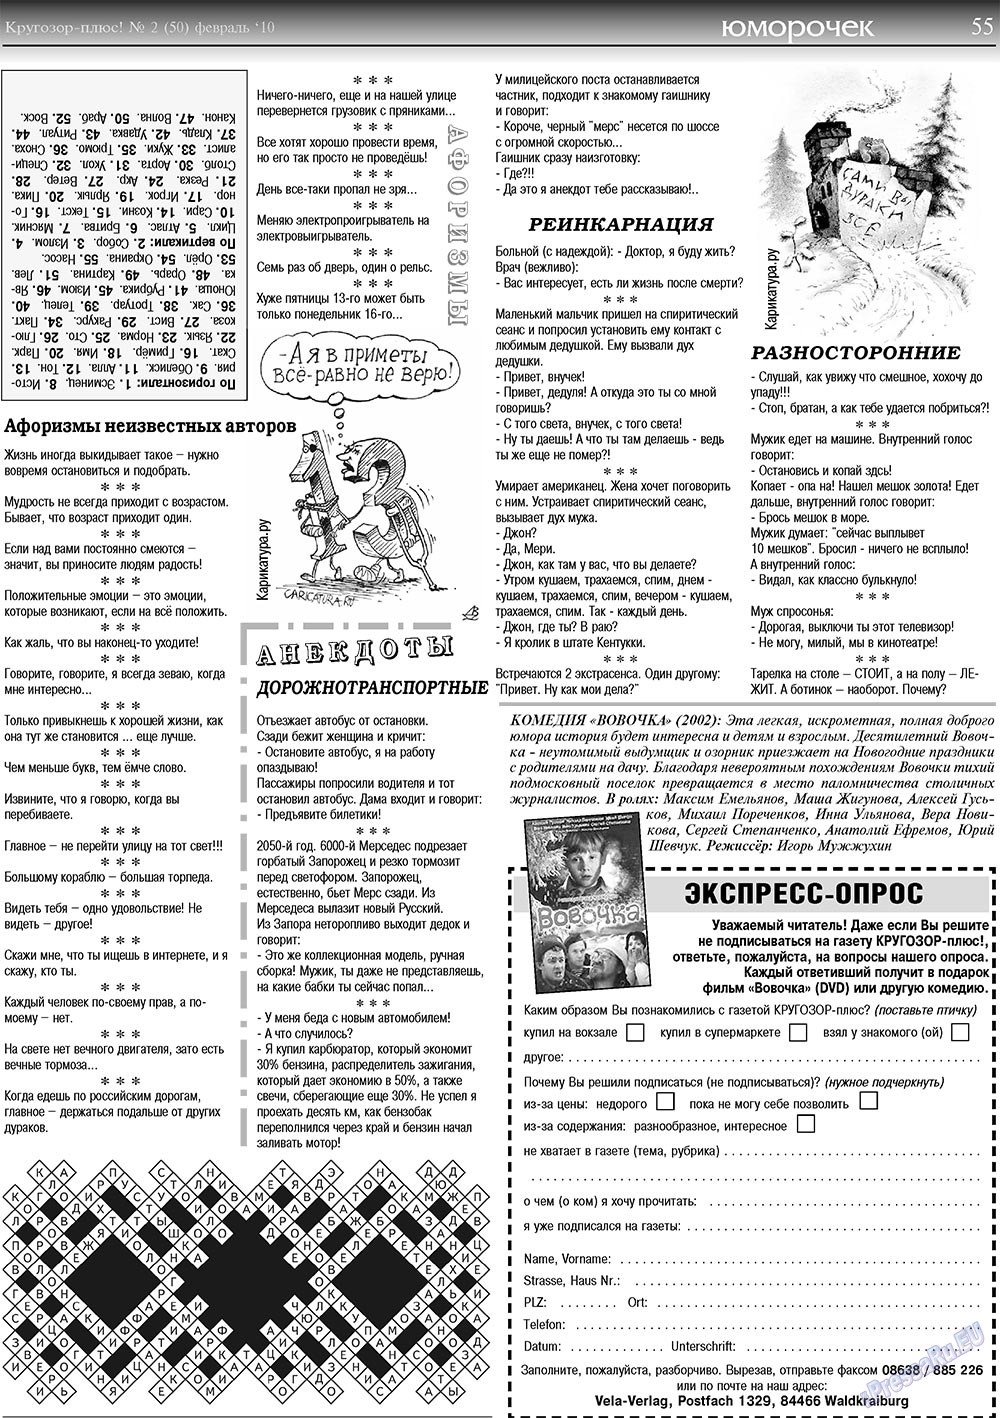 Кругозор плюс! (газета). 2010 год, номер 2, стр. 55